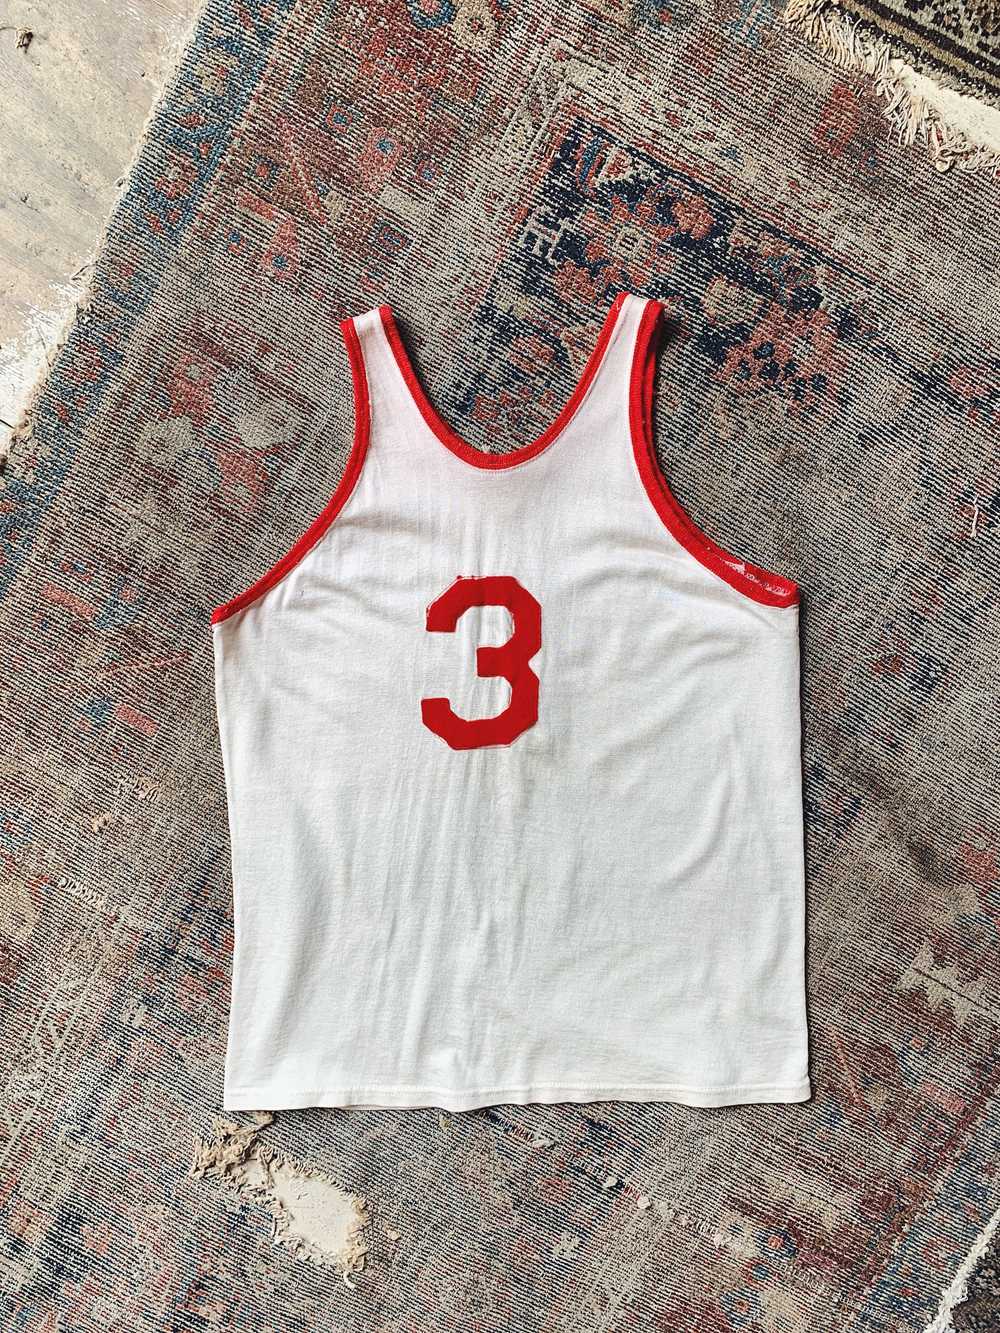 Vintage “P.C.L.” Basketball Jersey - image 3